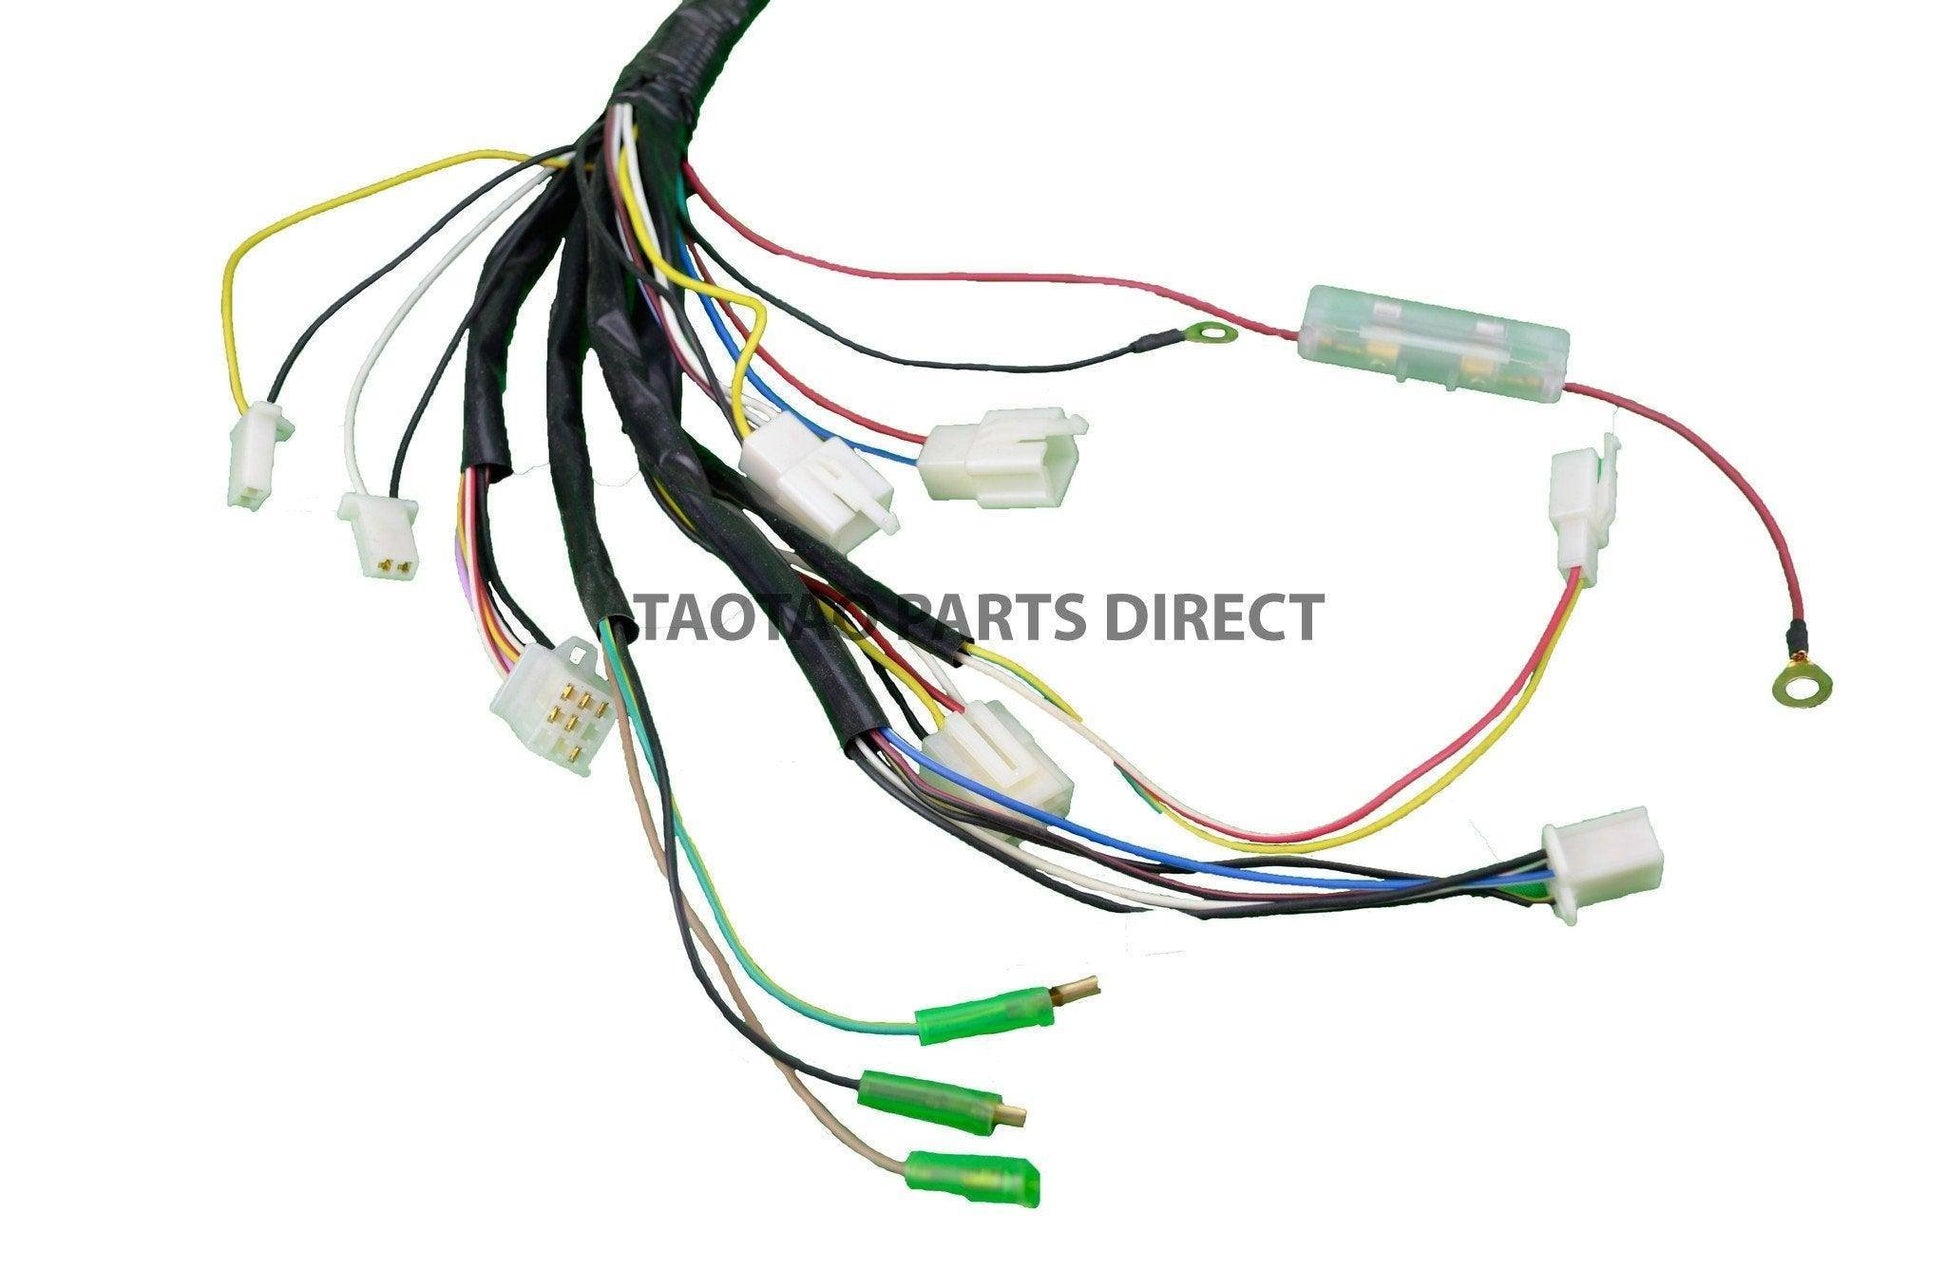 ATA135D Wire Harness #15 - TaoTao Parts Direct